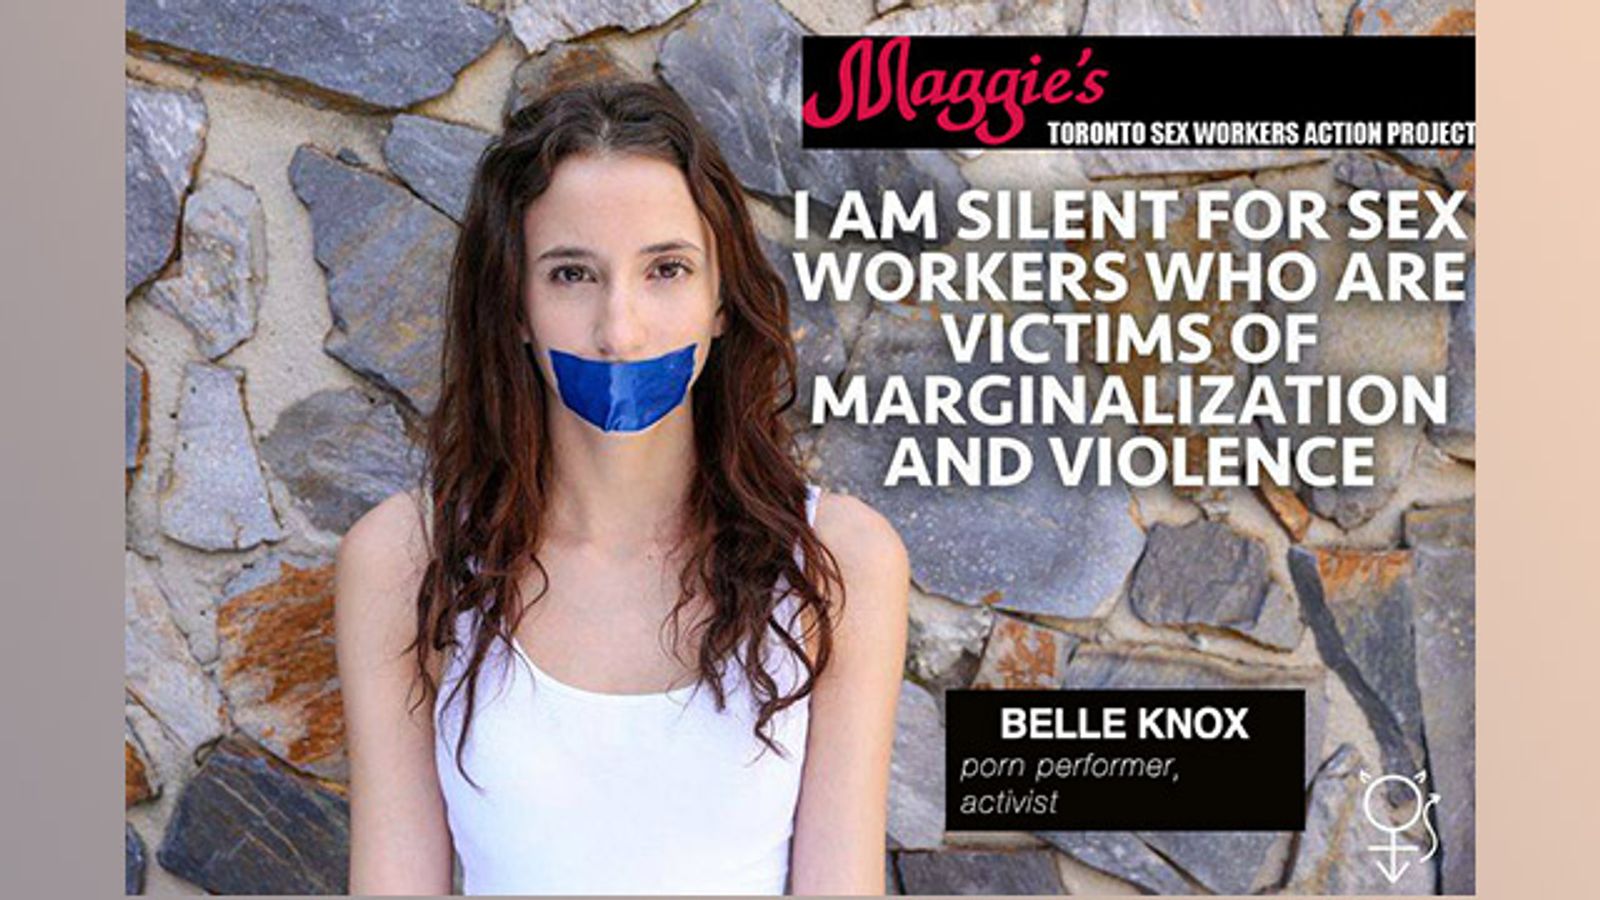 Belle Knox Donates Undies, Autographs to Sex Worker Group